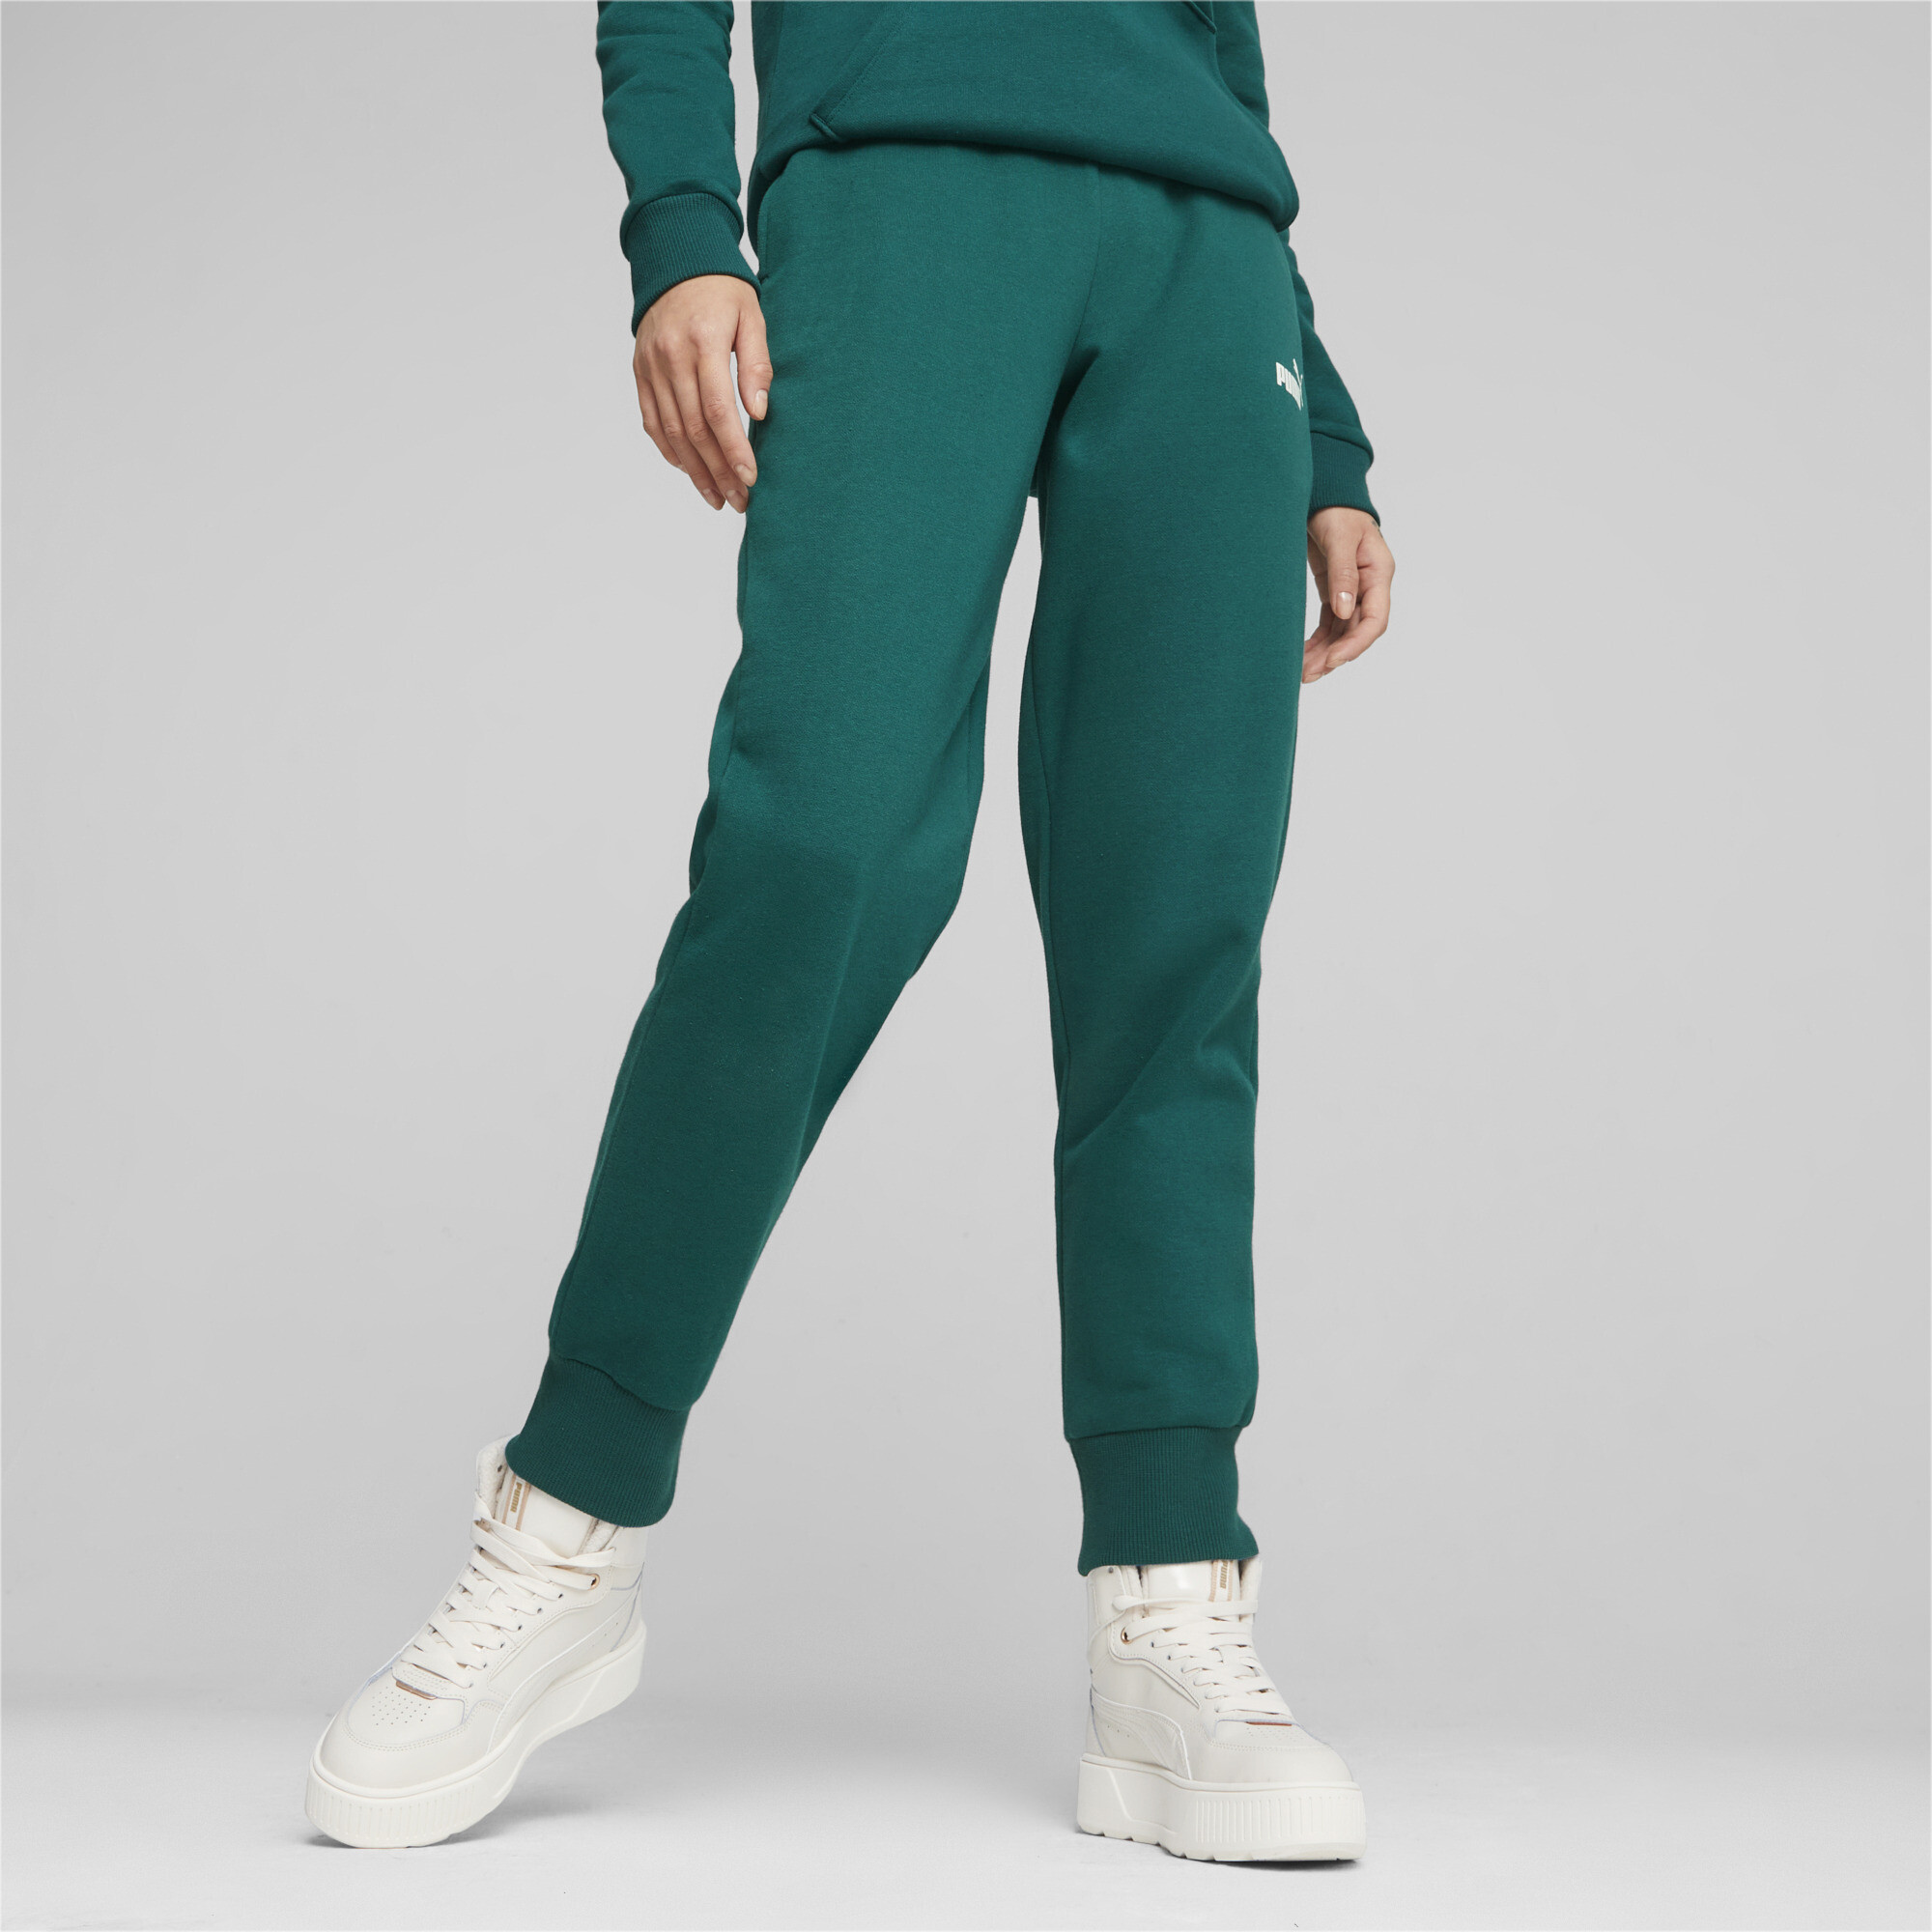 Women's Puma Essentials's Sweatpants, Green, Size S, Clothing